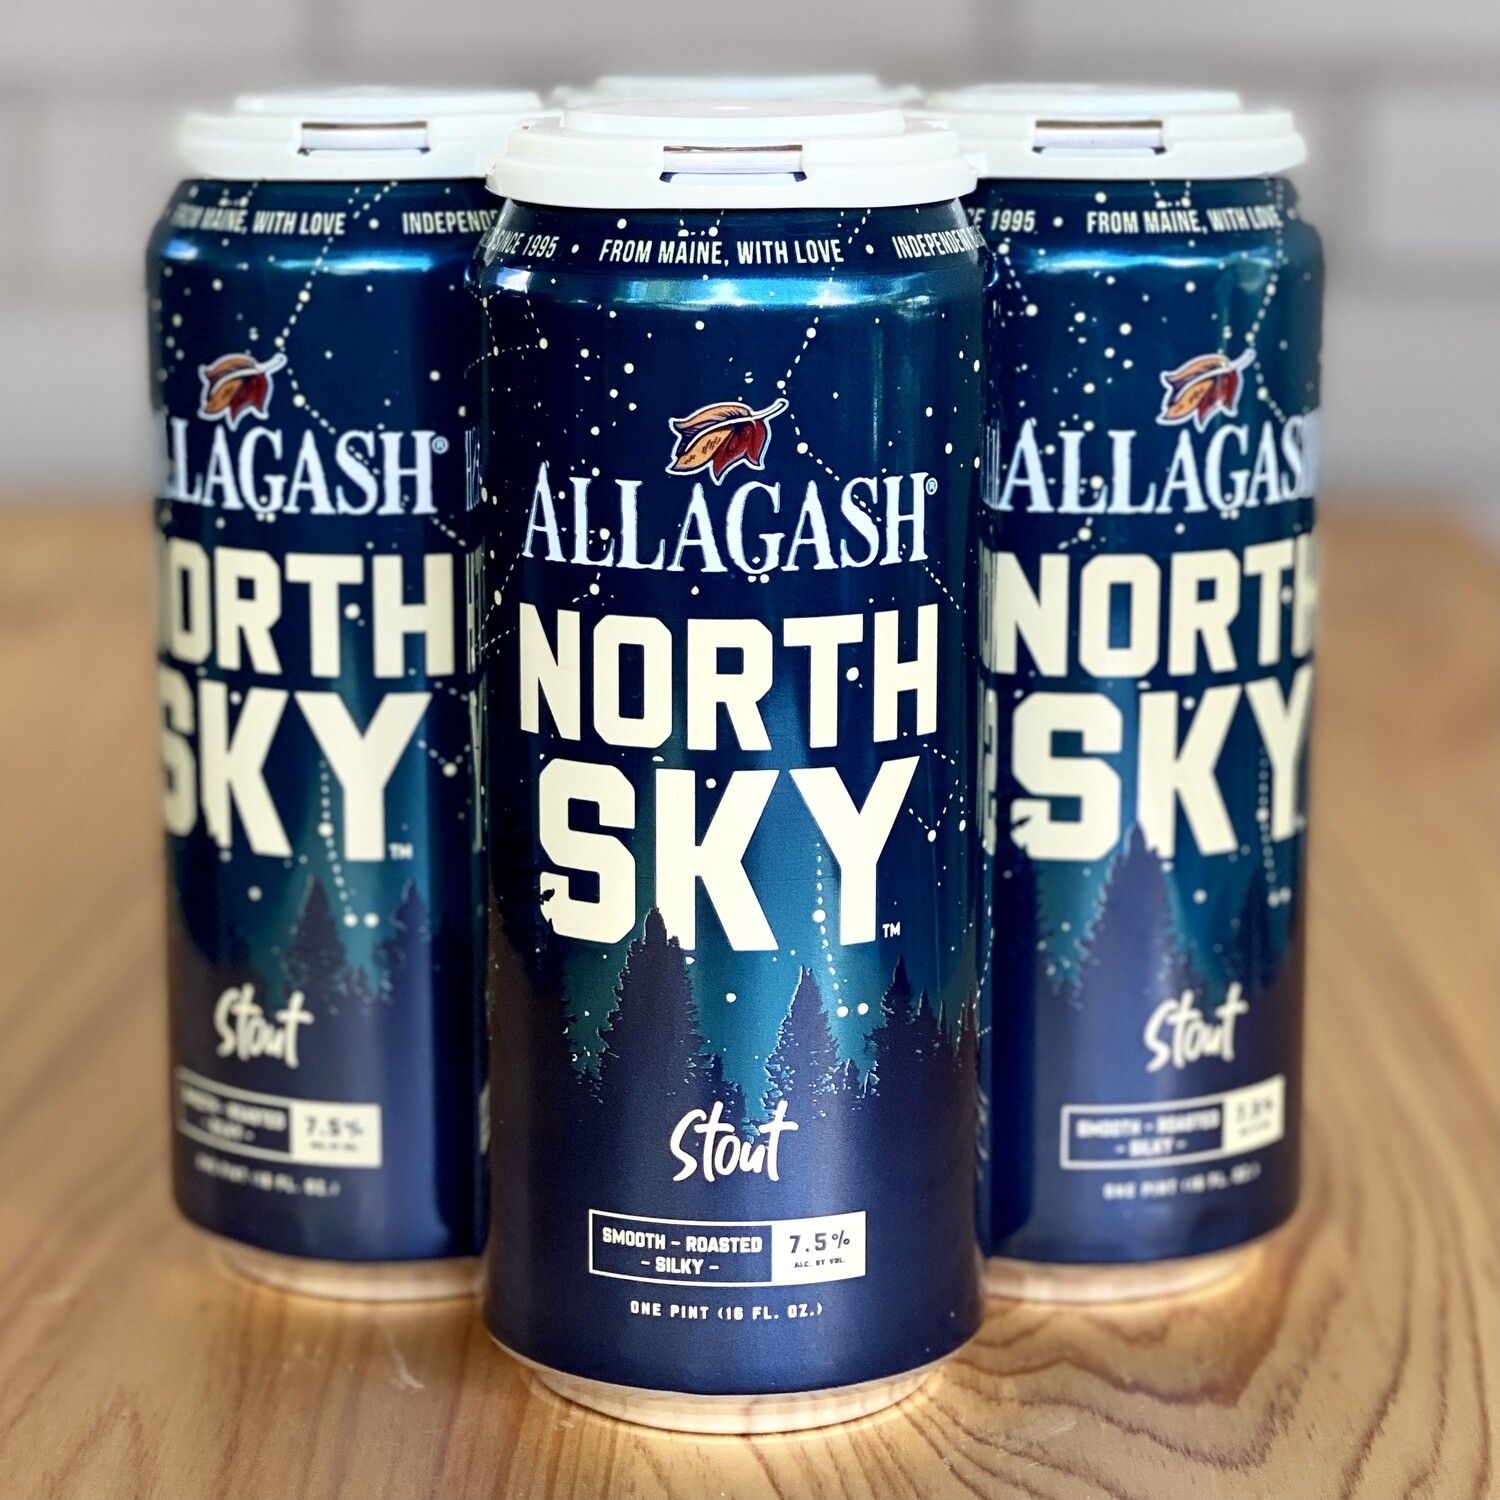 Allagash North Sky Stout (4pk)